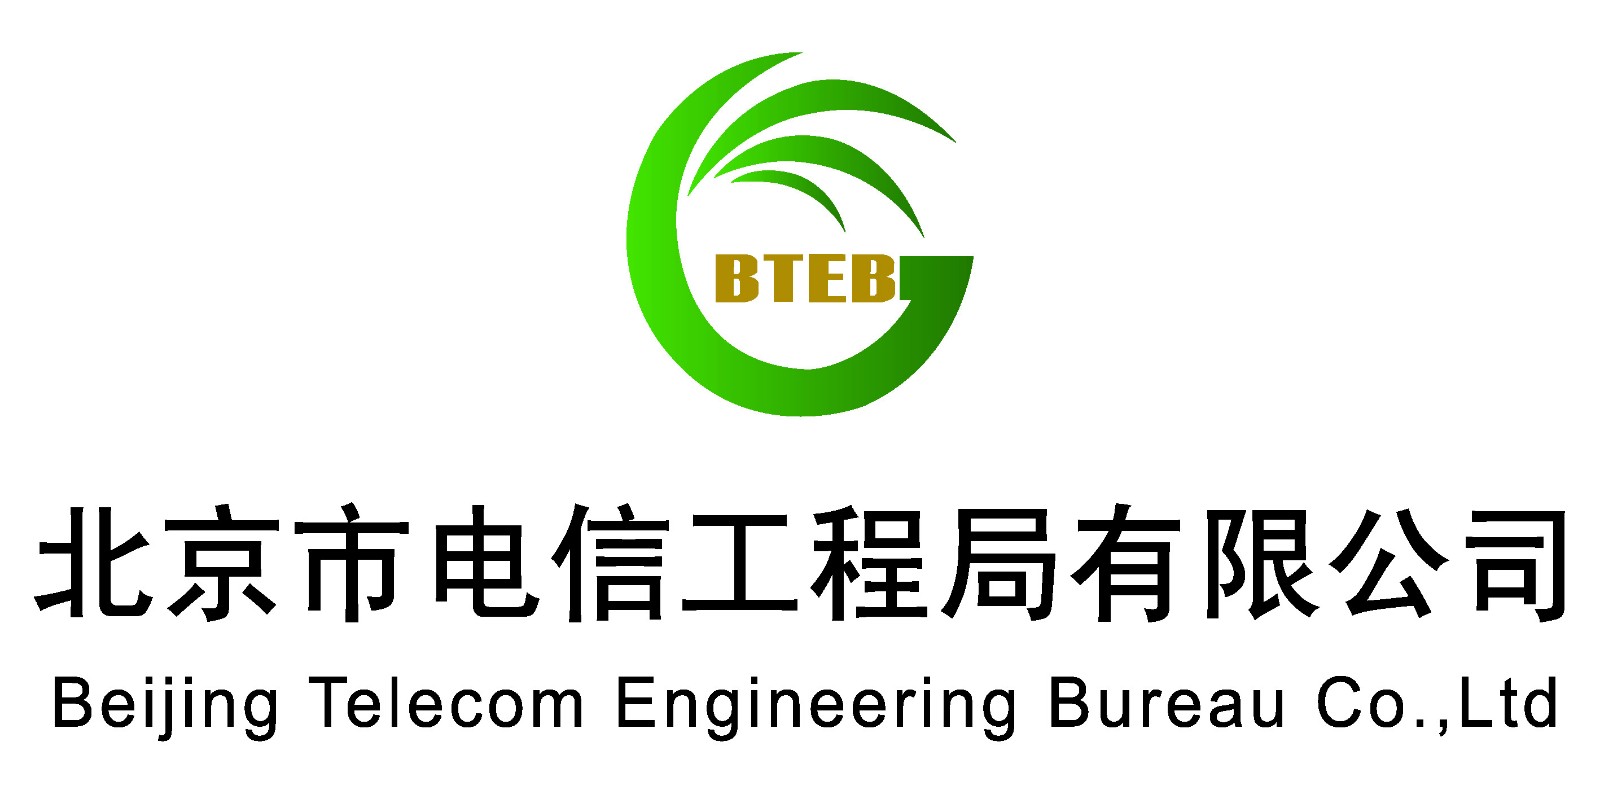 Beijing Telecom Engineering Bureau Co., Ltd